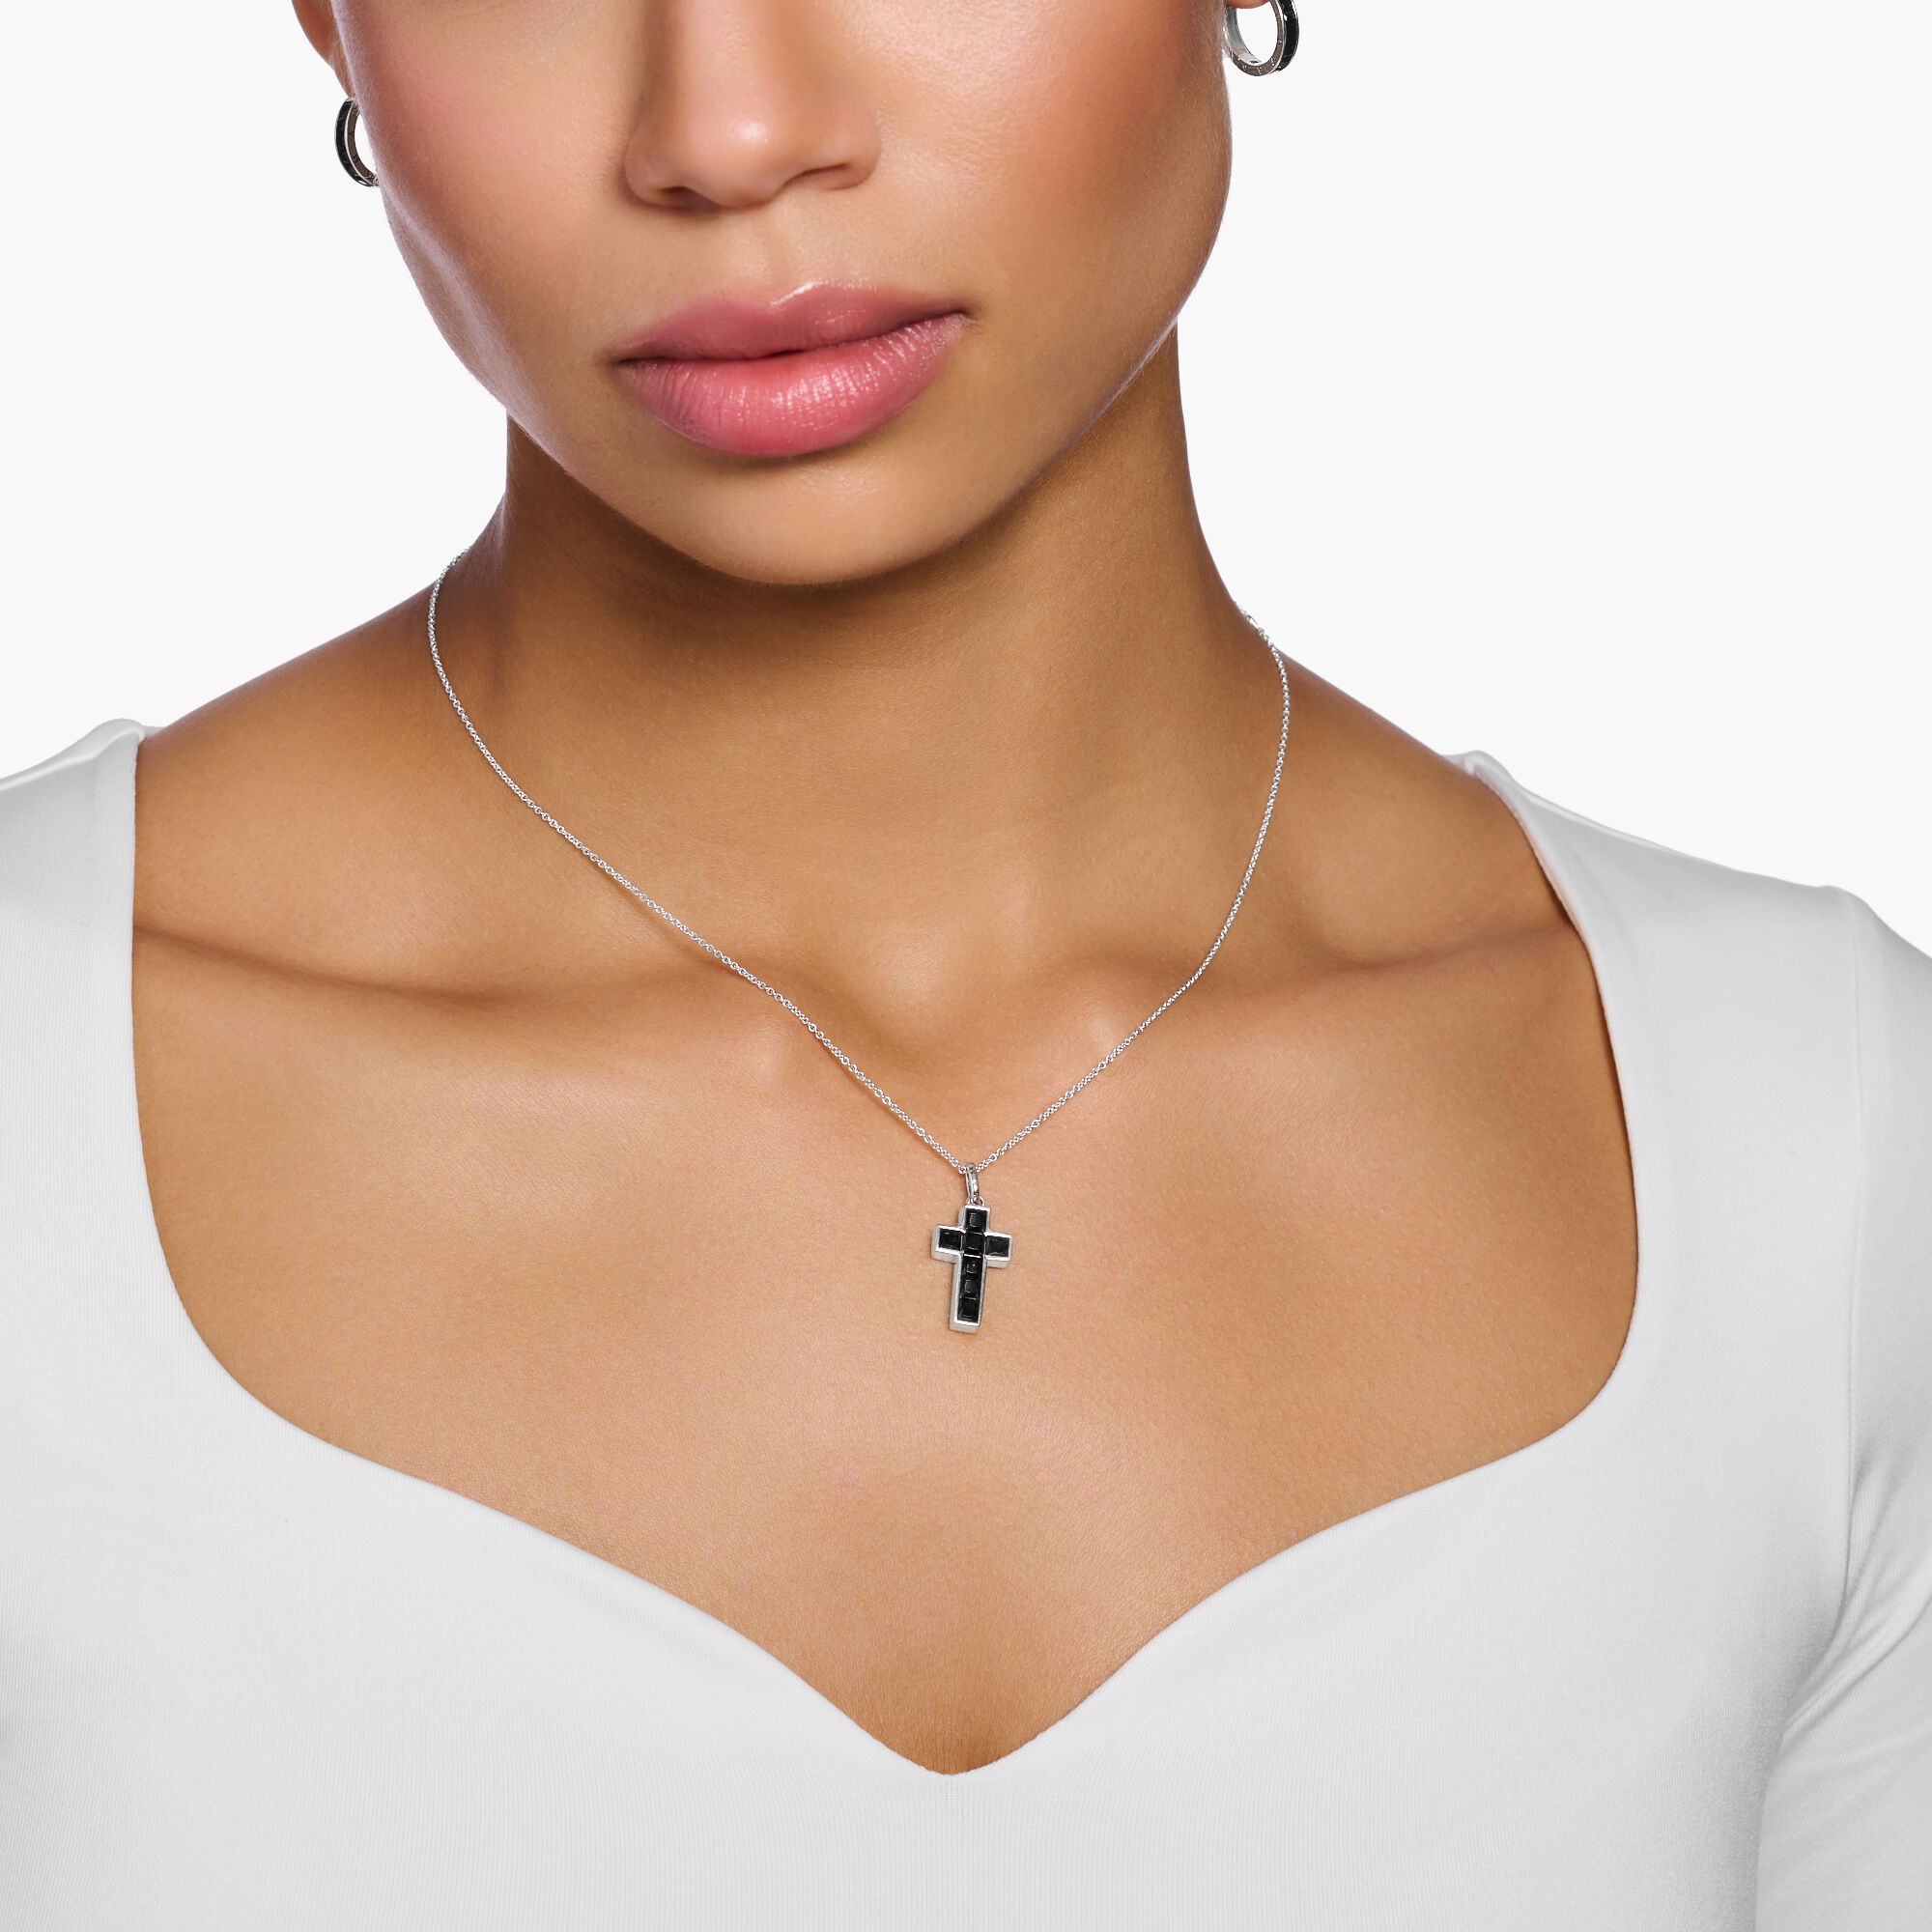 stones Necklace pendant, SABO THOMAS with | cross black